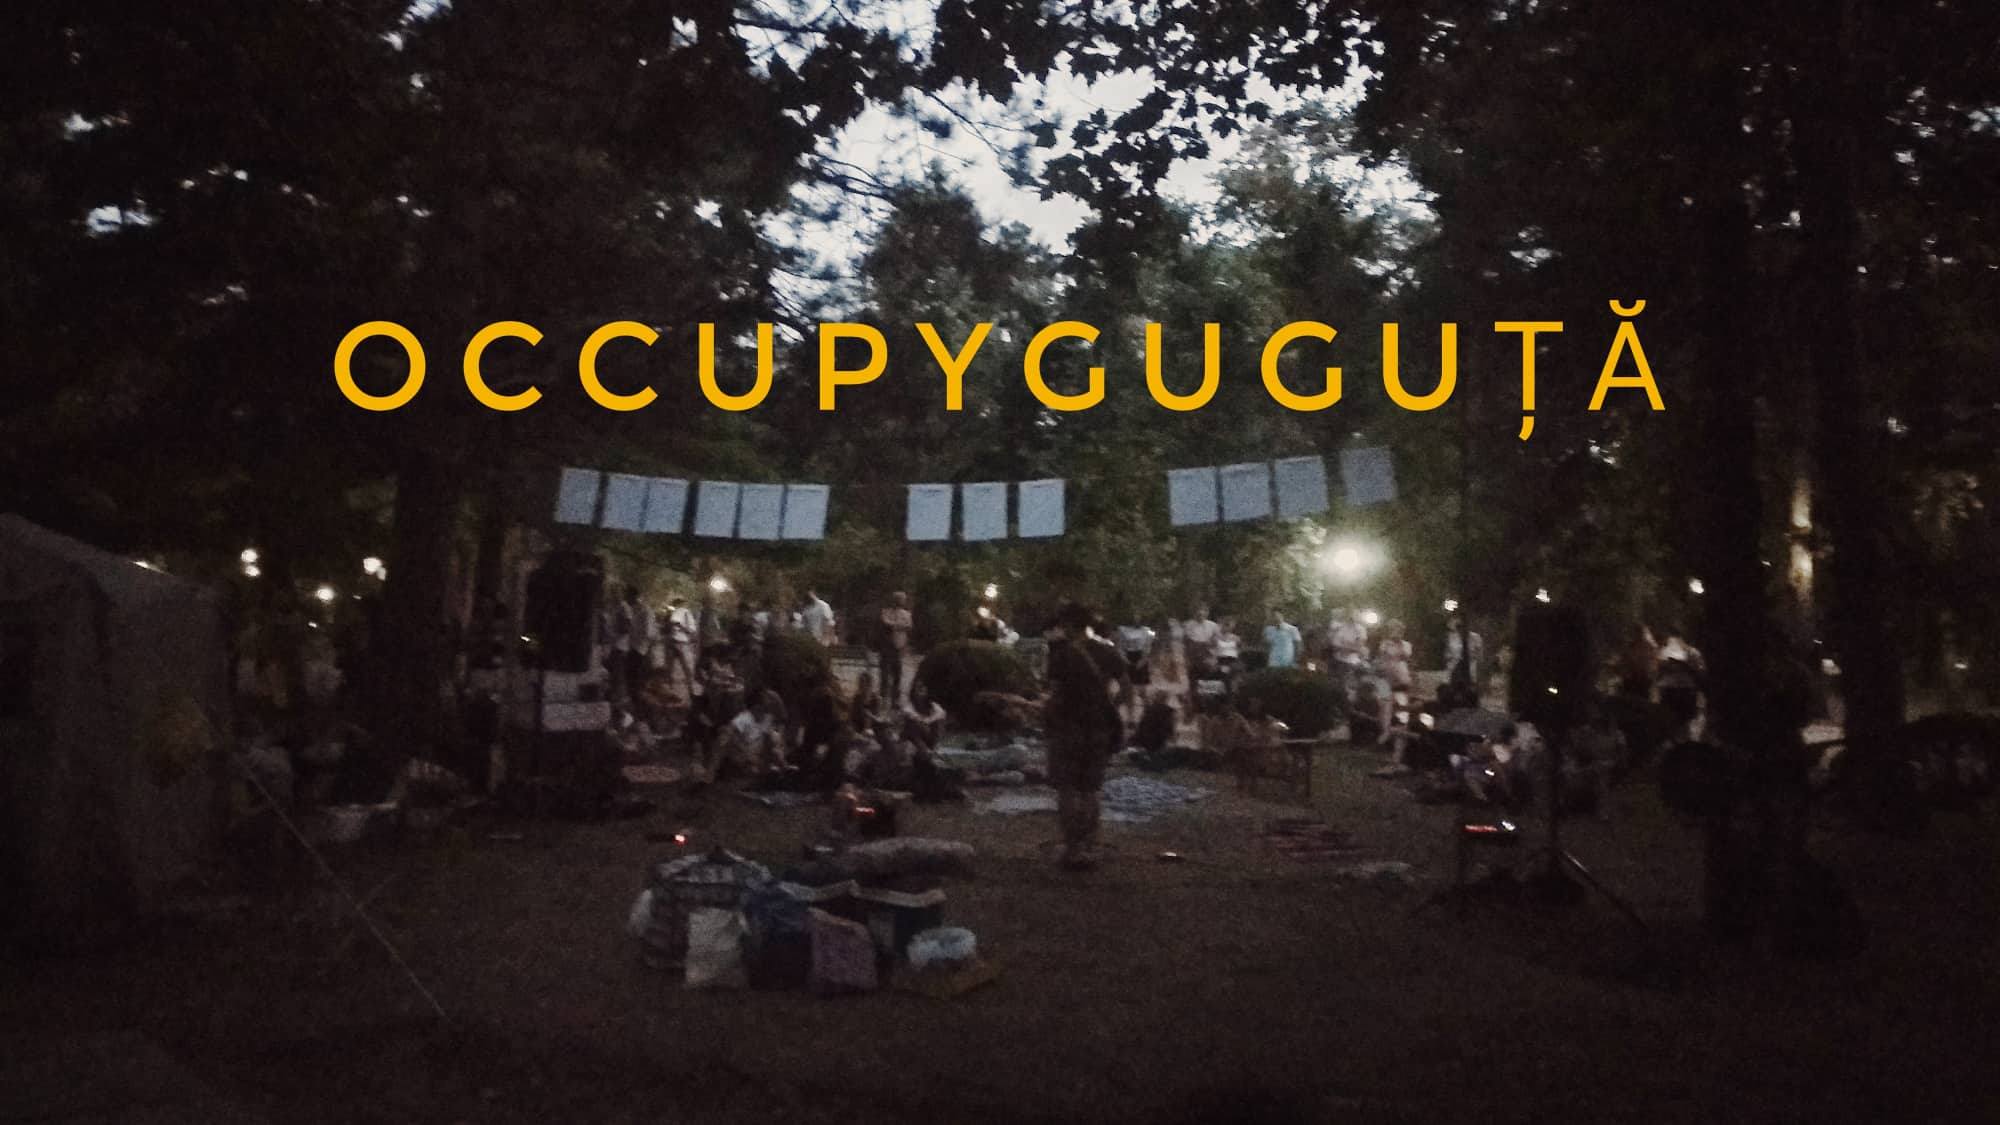 Occupy Guguță